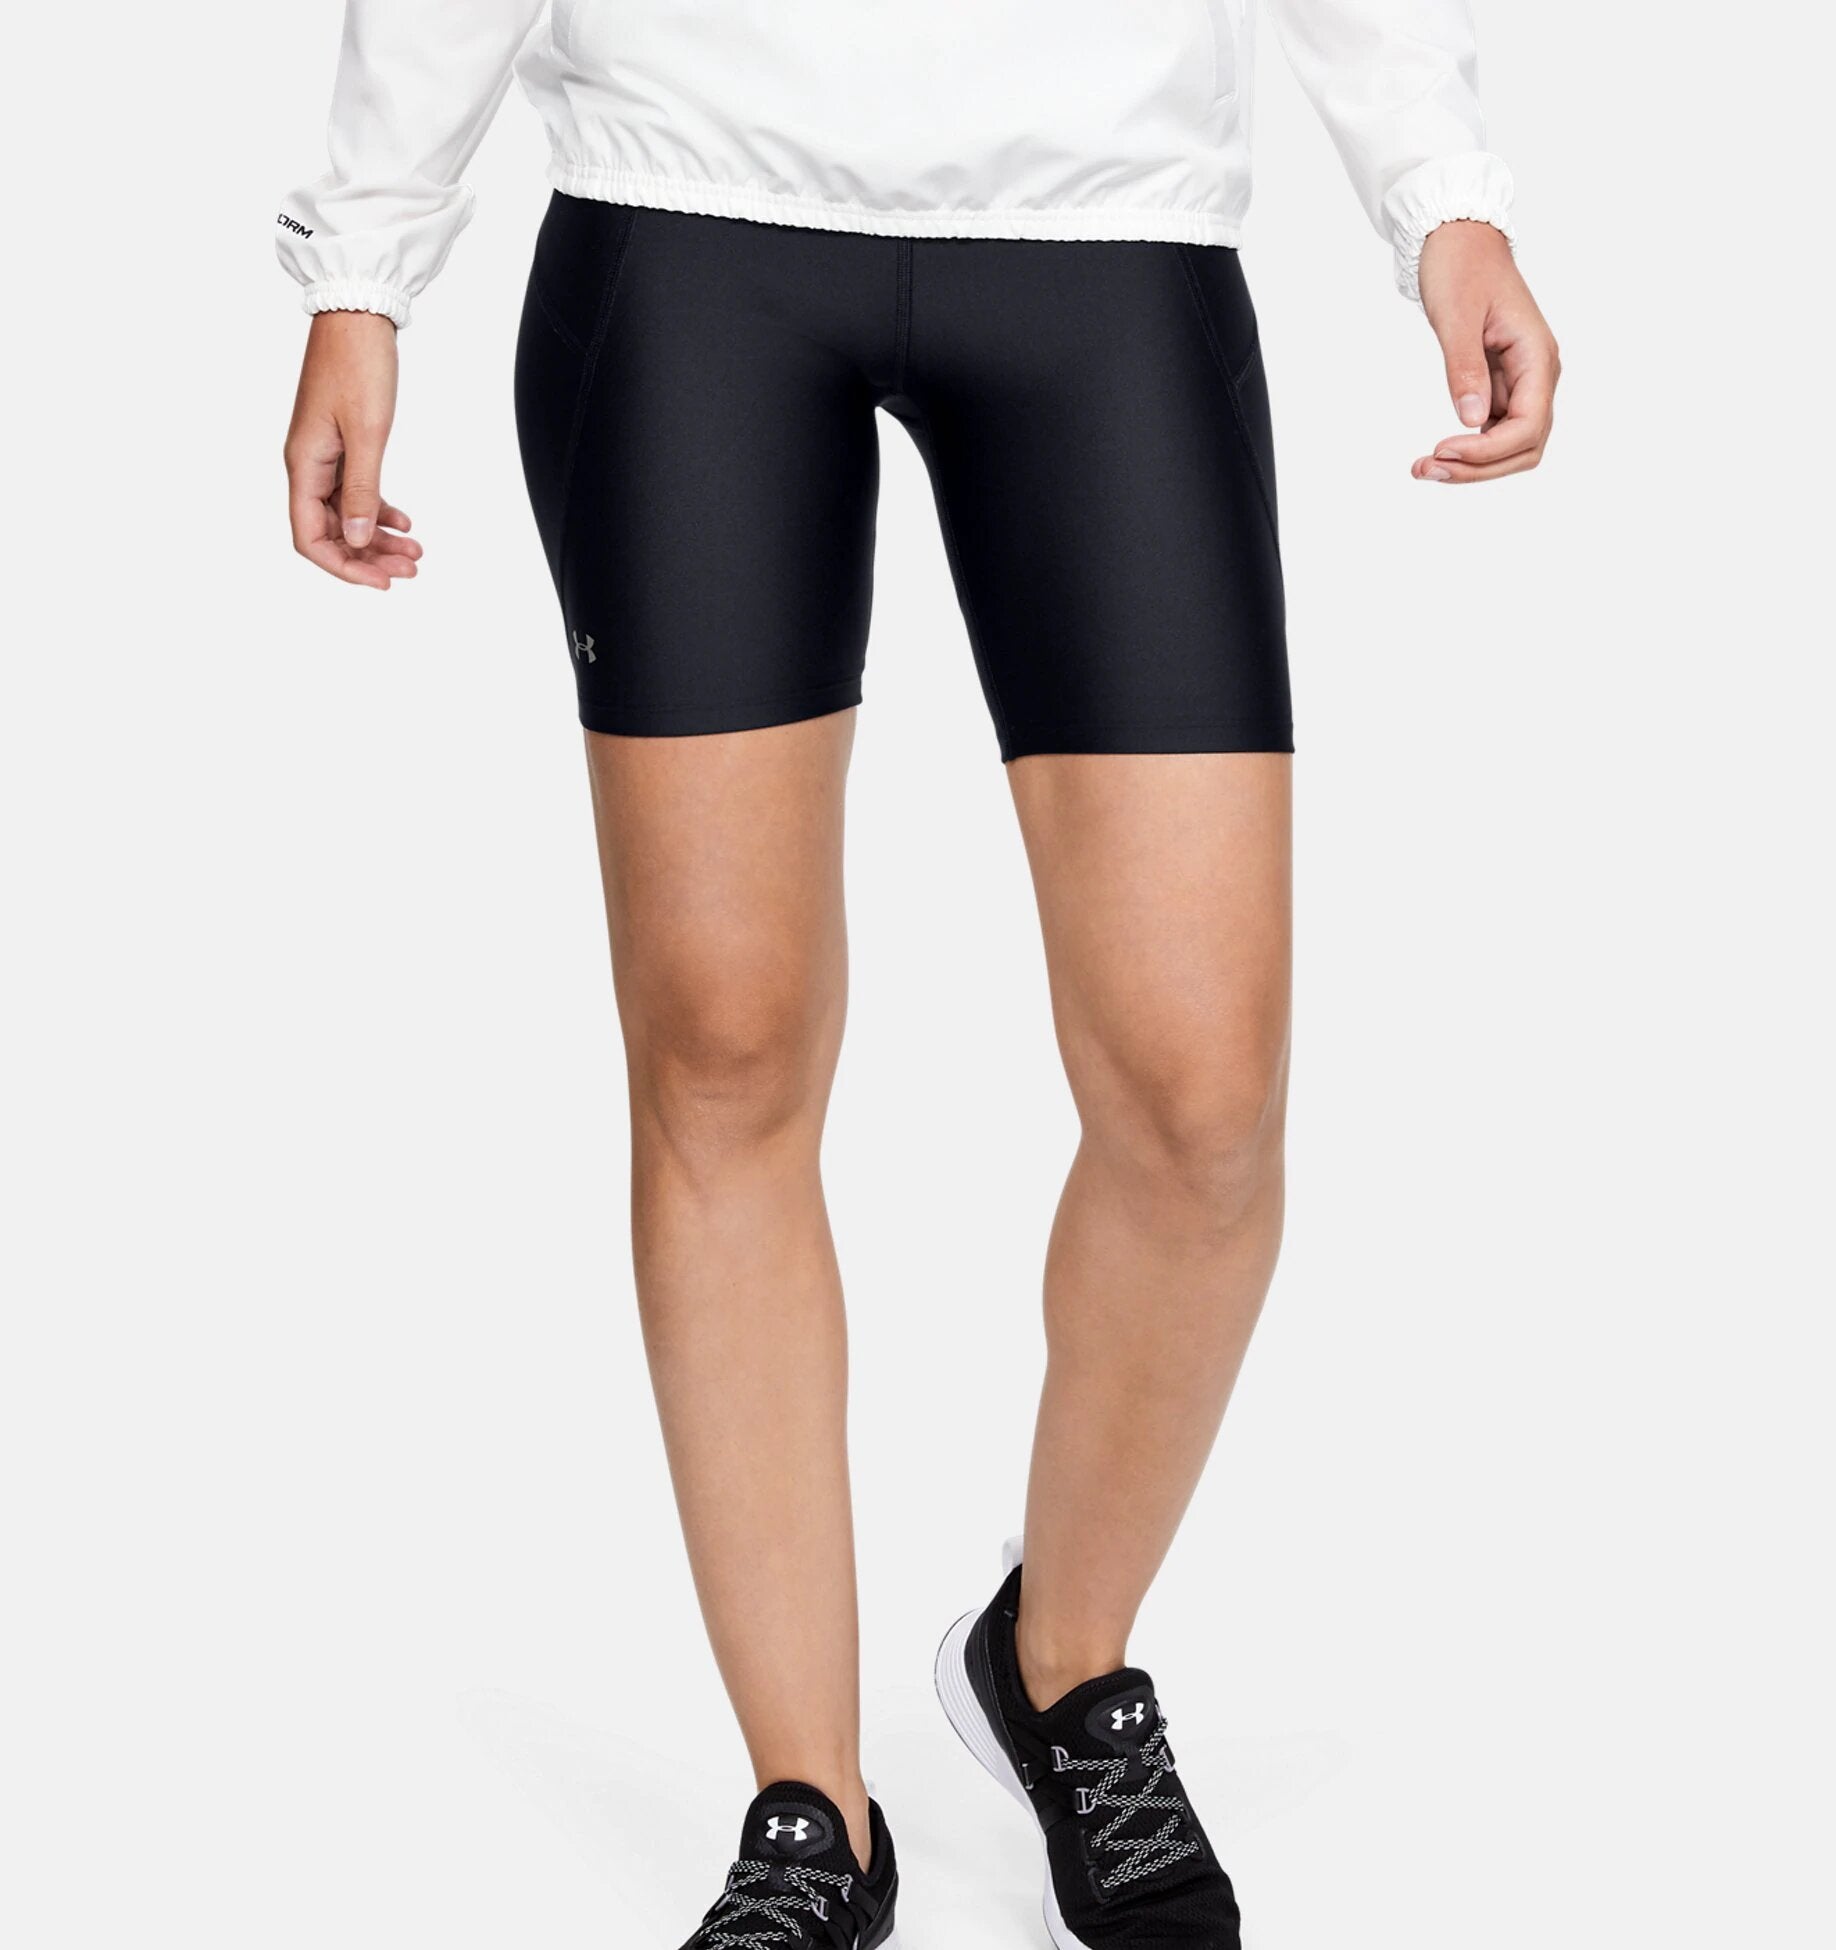 womens compression bike shorts